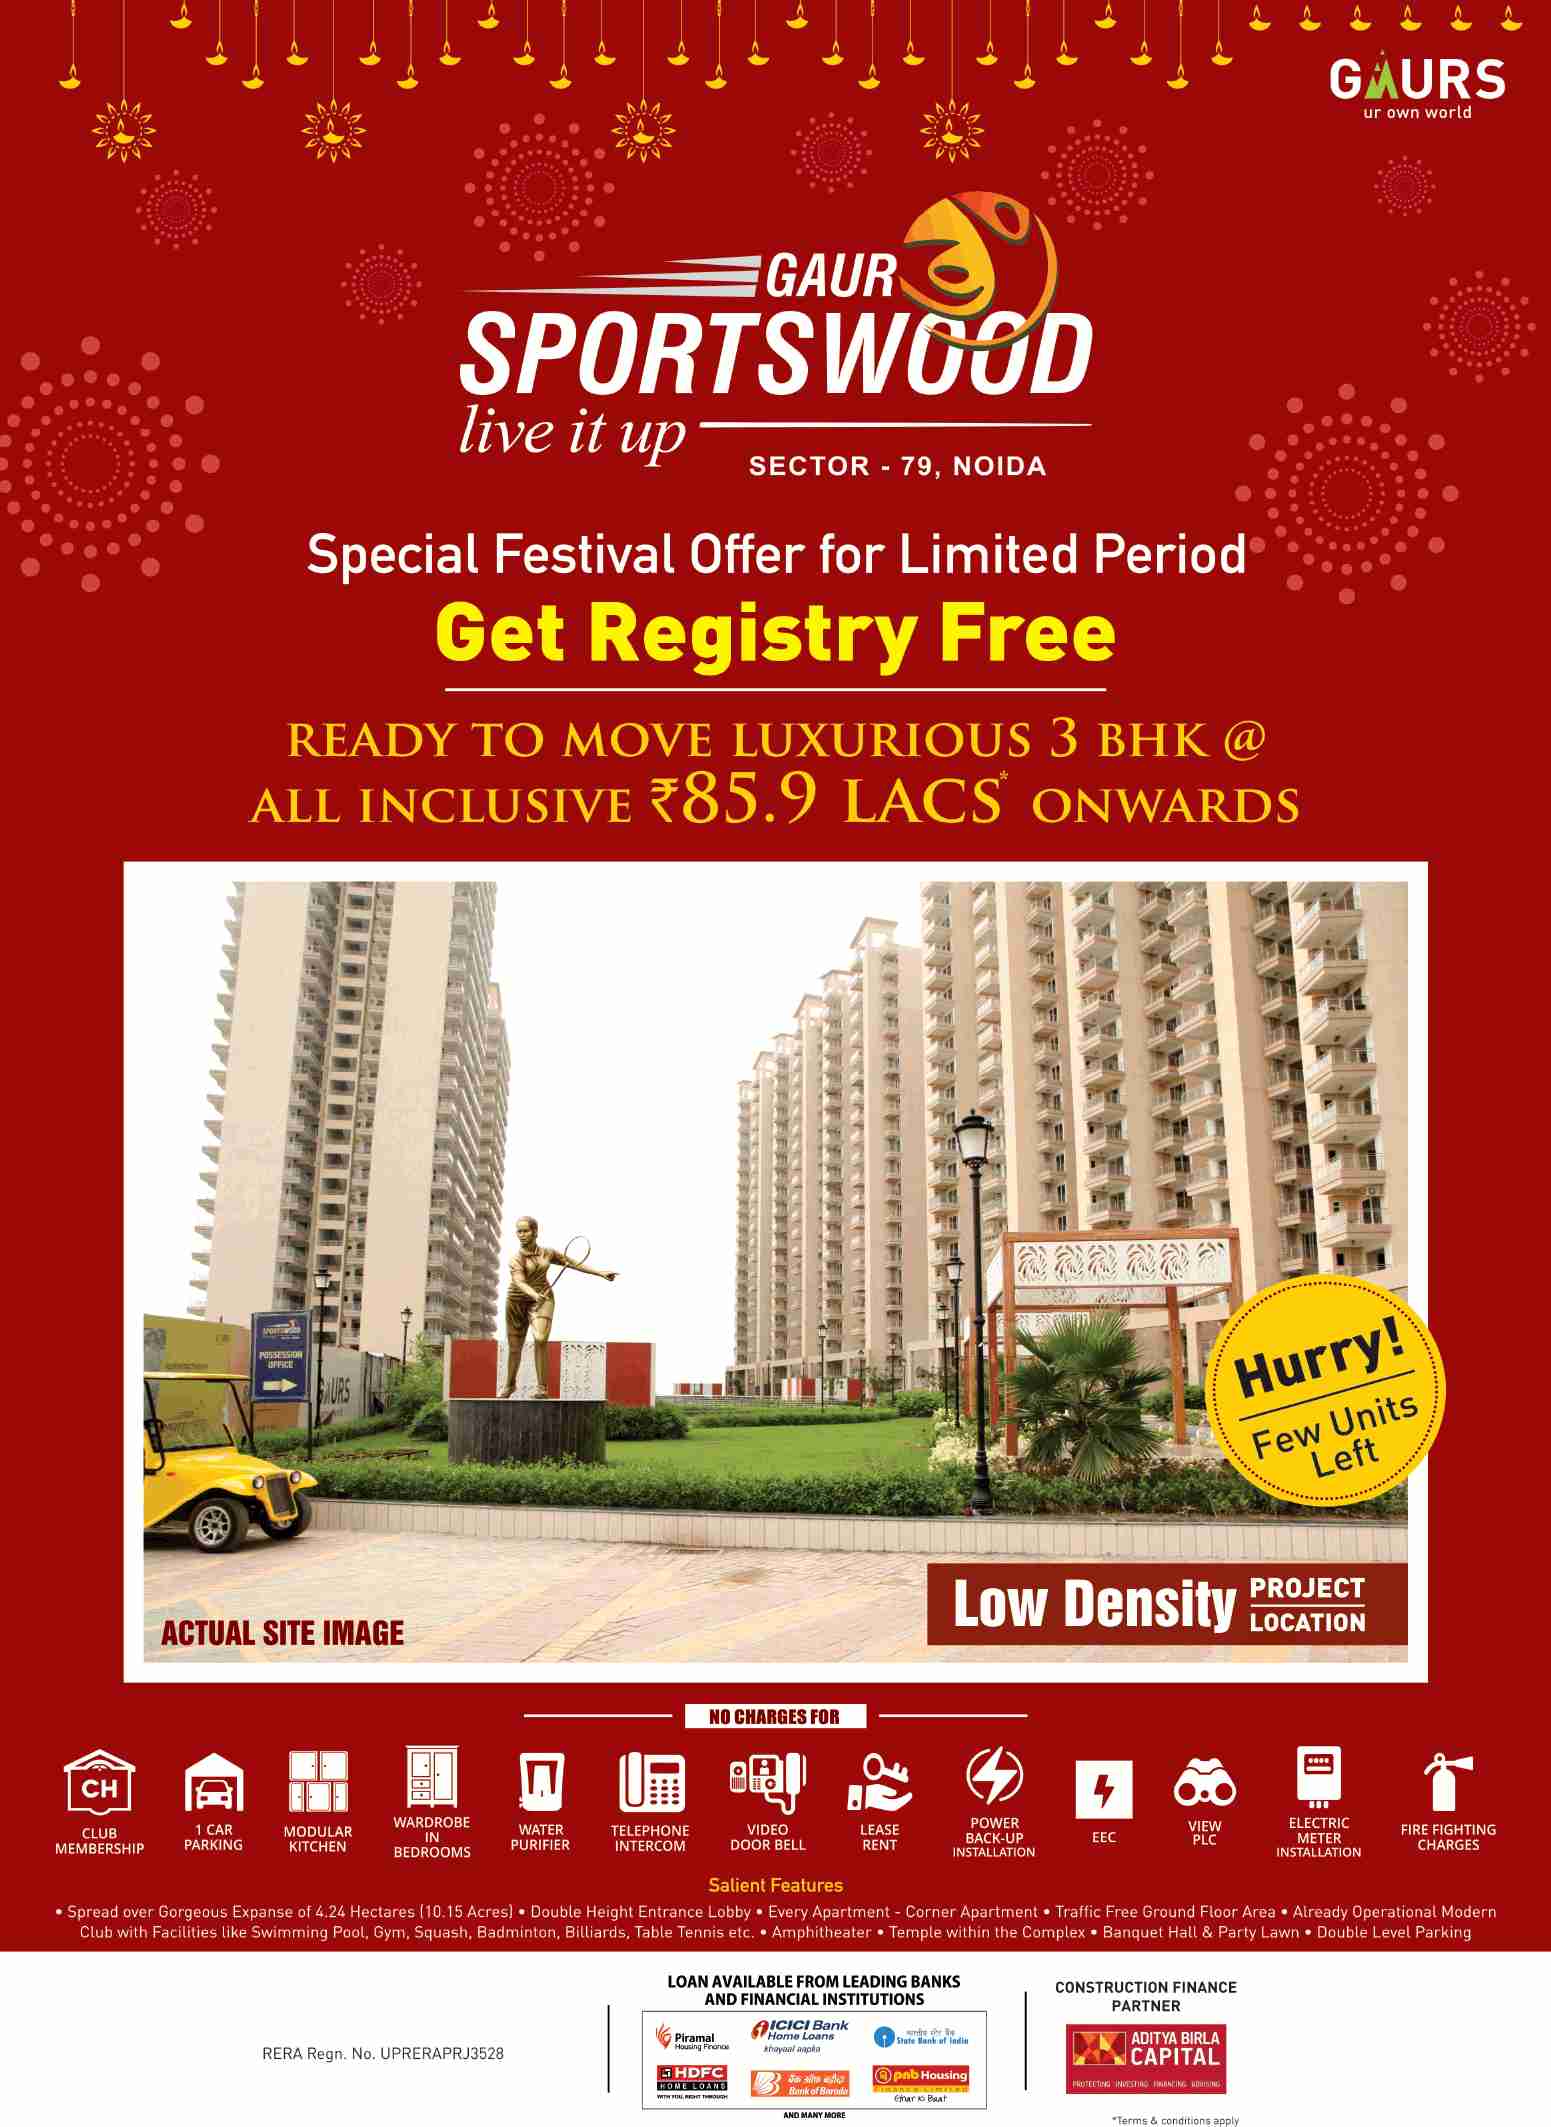 Get registry free during festival offer at Gaur Sportswood in Sector 79, Noida